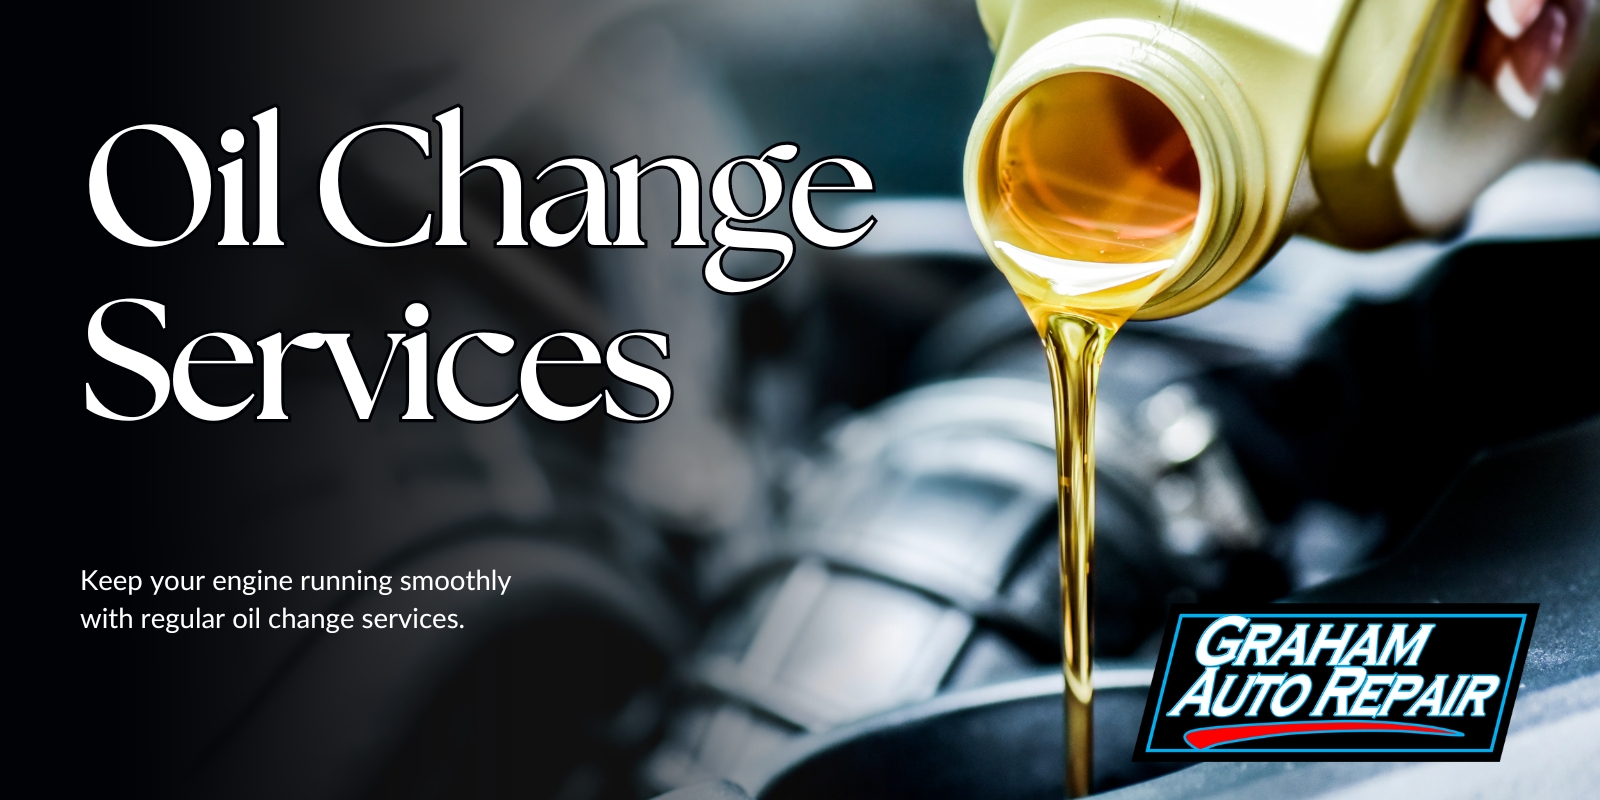 Oil Change Services in Graham WA and Yelm WA at Graham Auto Repair